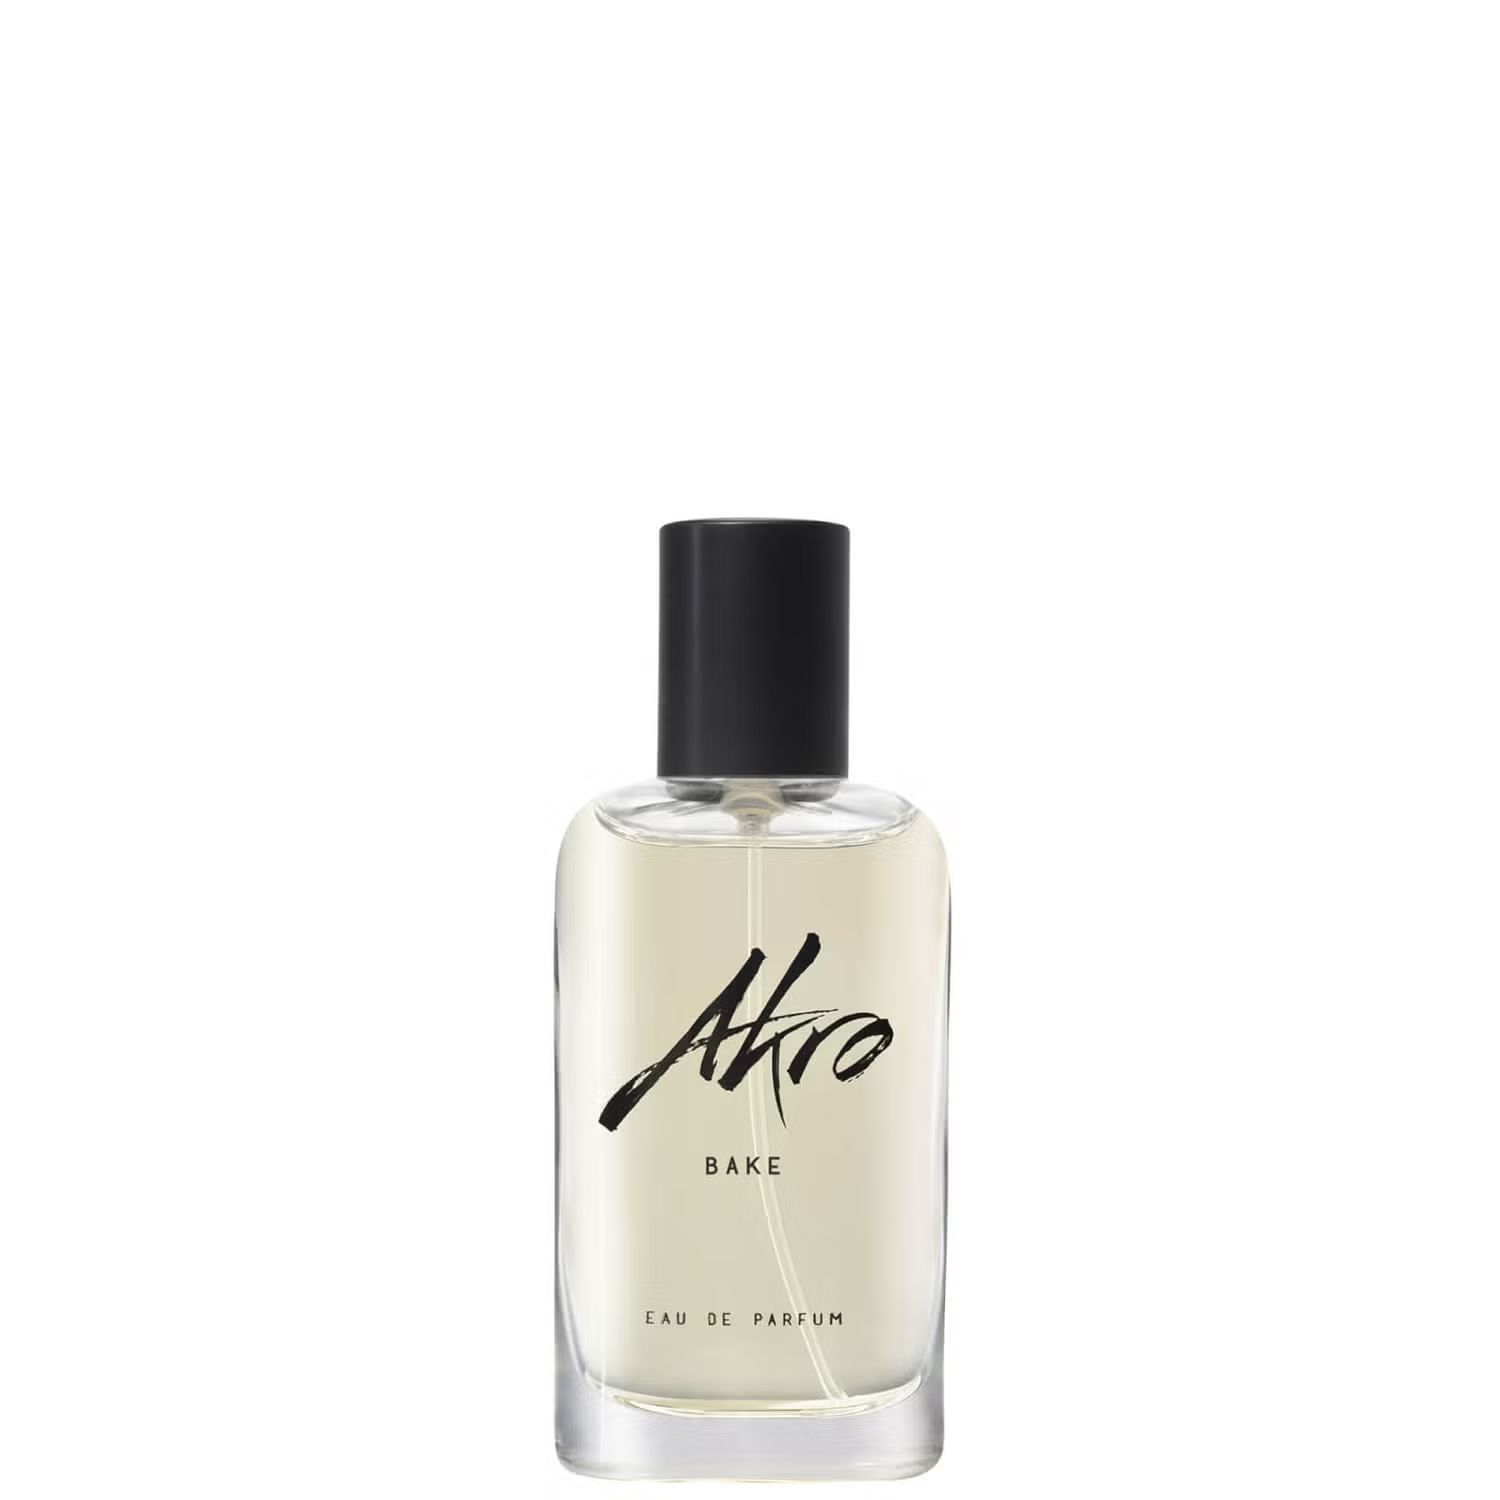 Akro Bake Eau de Parfum 30ml | Look Fantastic (UK)